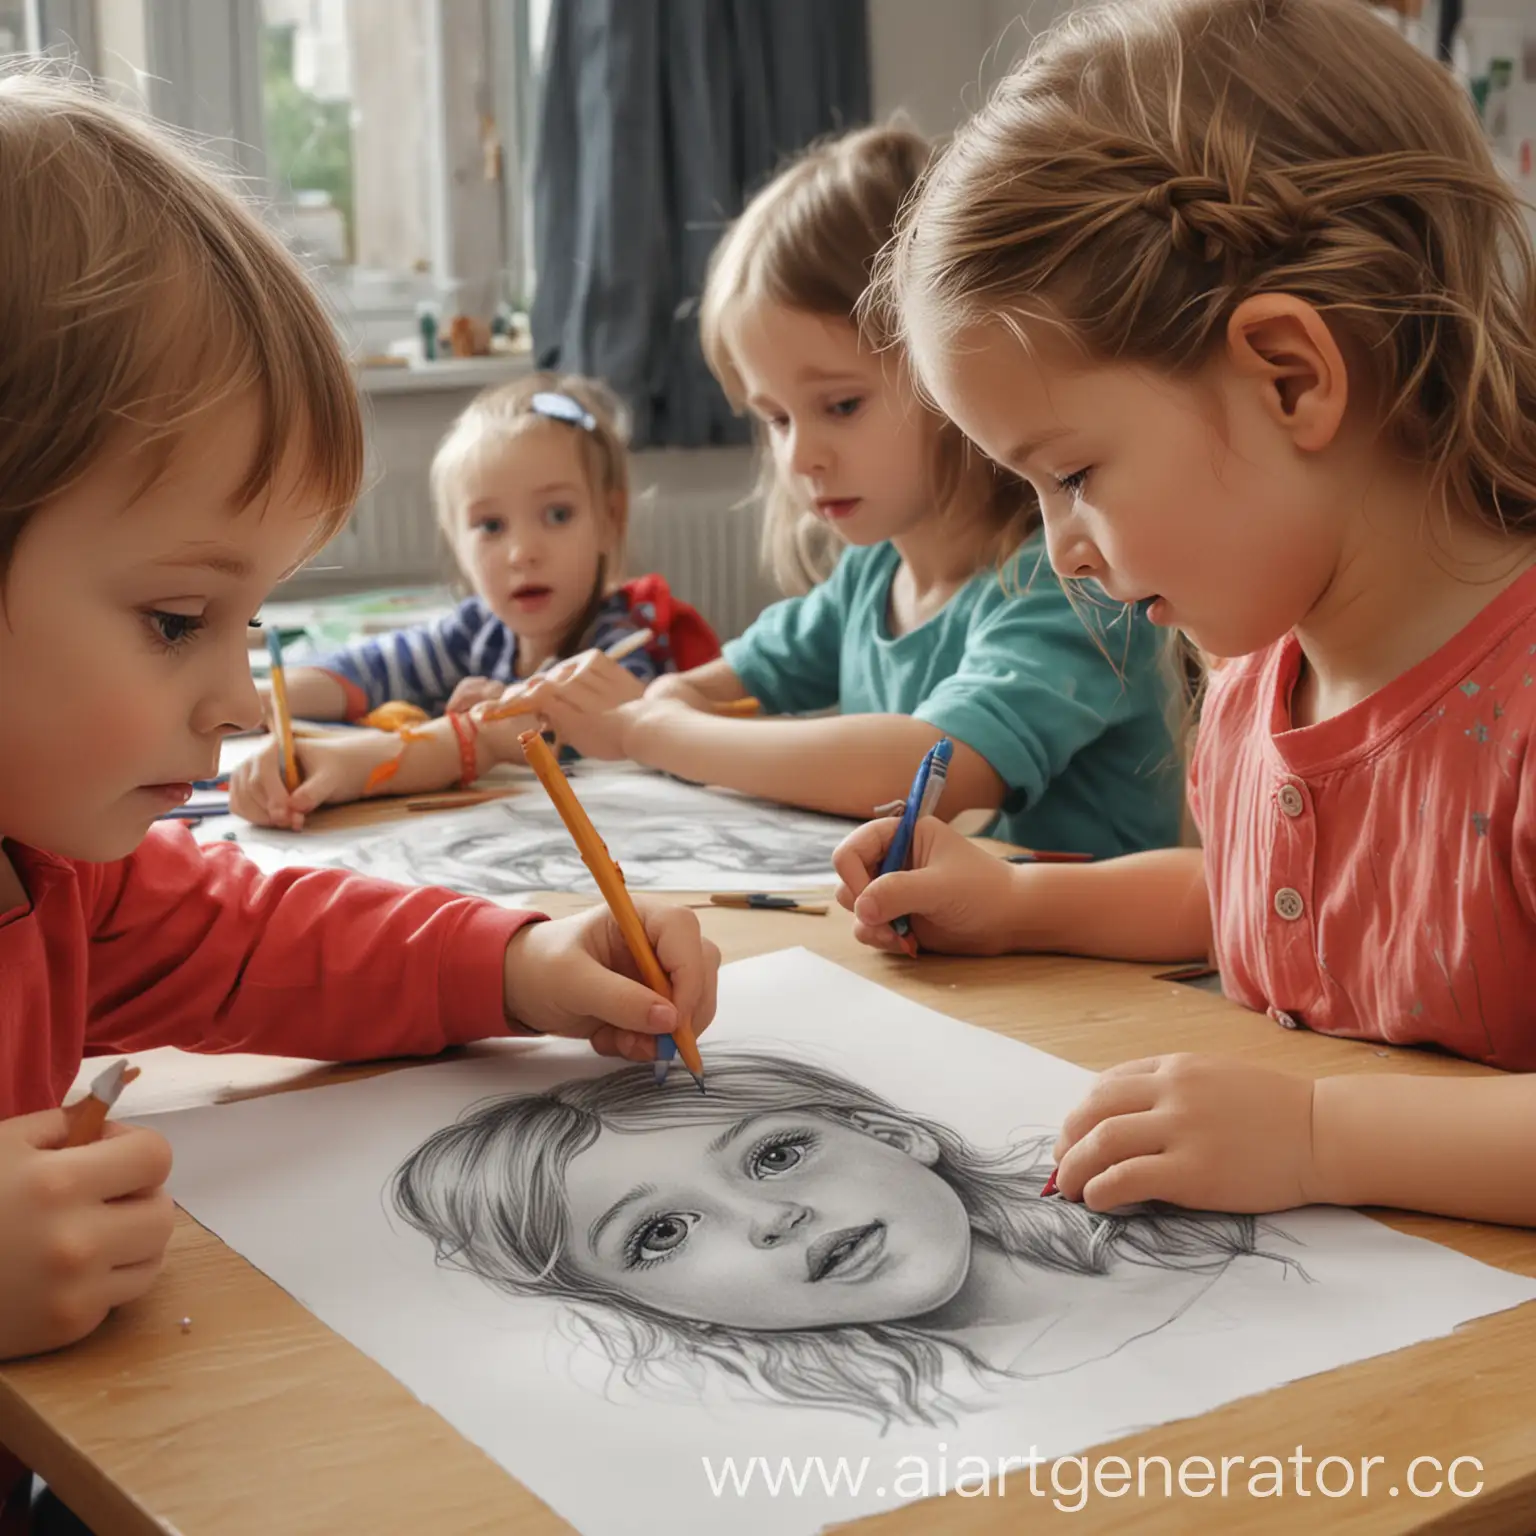 дети рисуют, детский сад, фотореализм